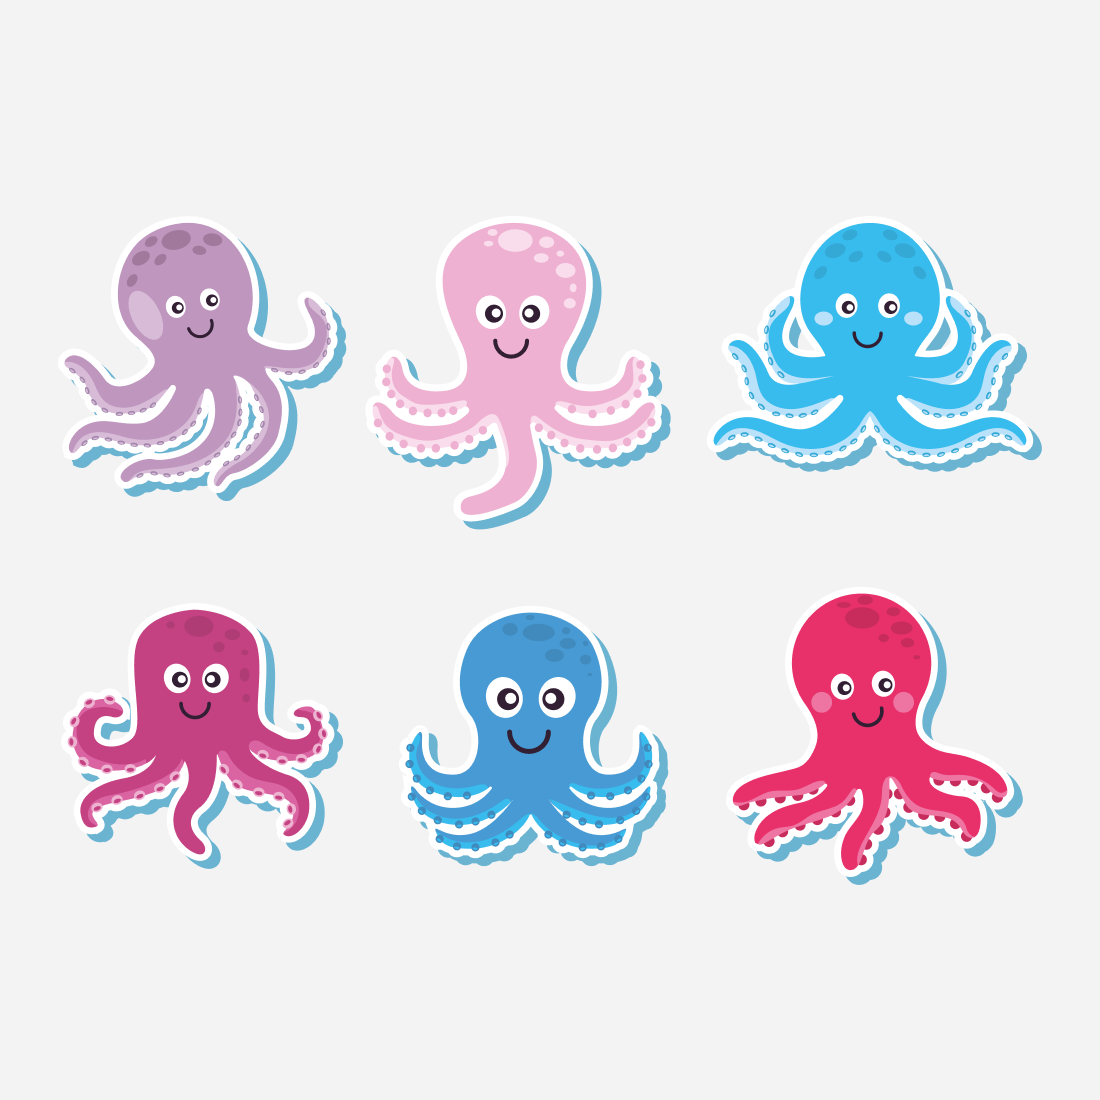 Multicolored children's octopuses.